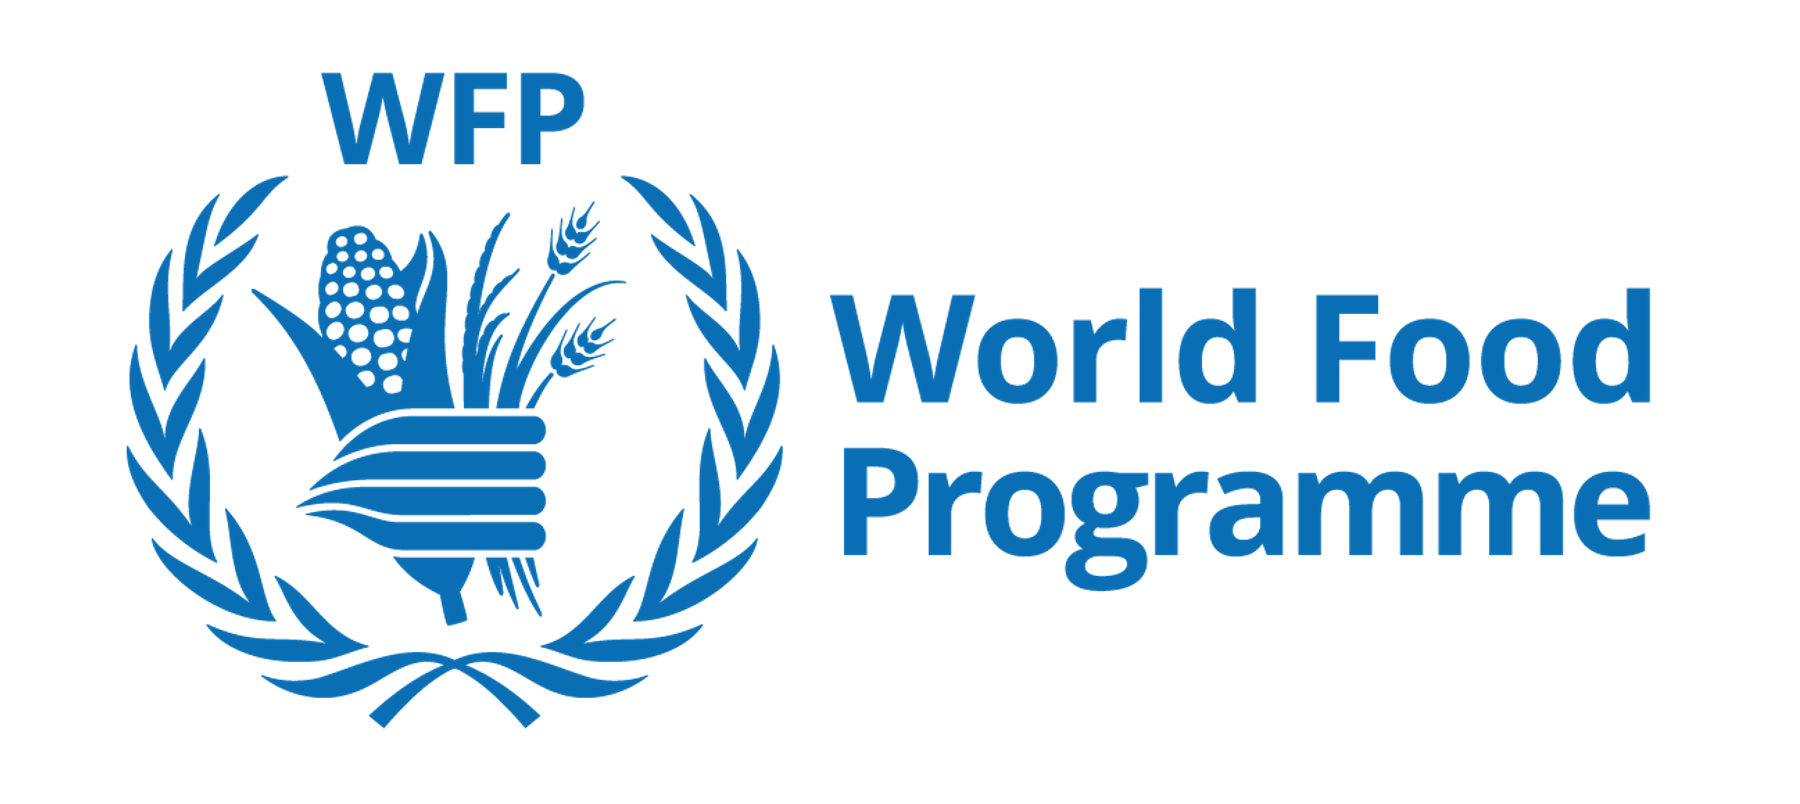 WFP_logo_large.png